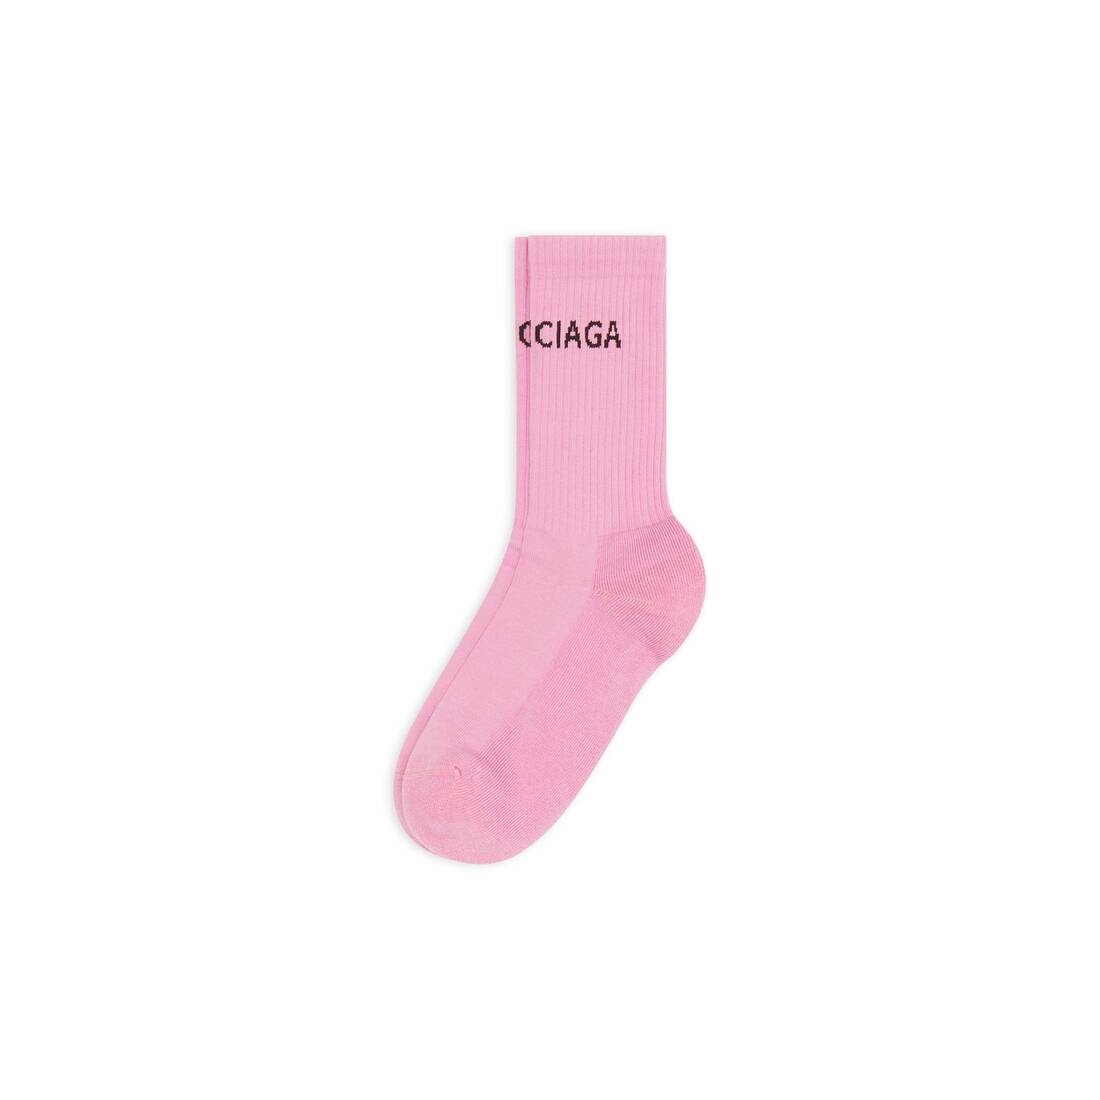 Men's Balenciaga Tennis Socks in Pink - 2